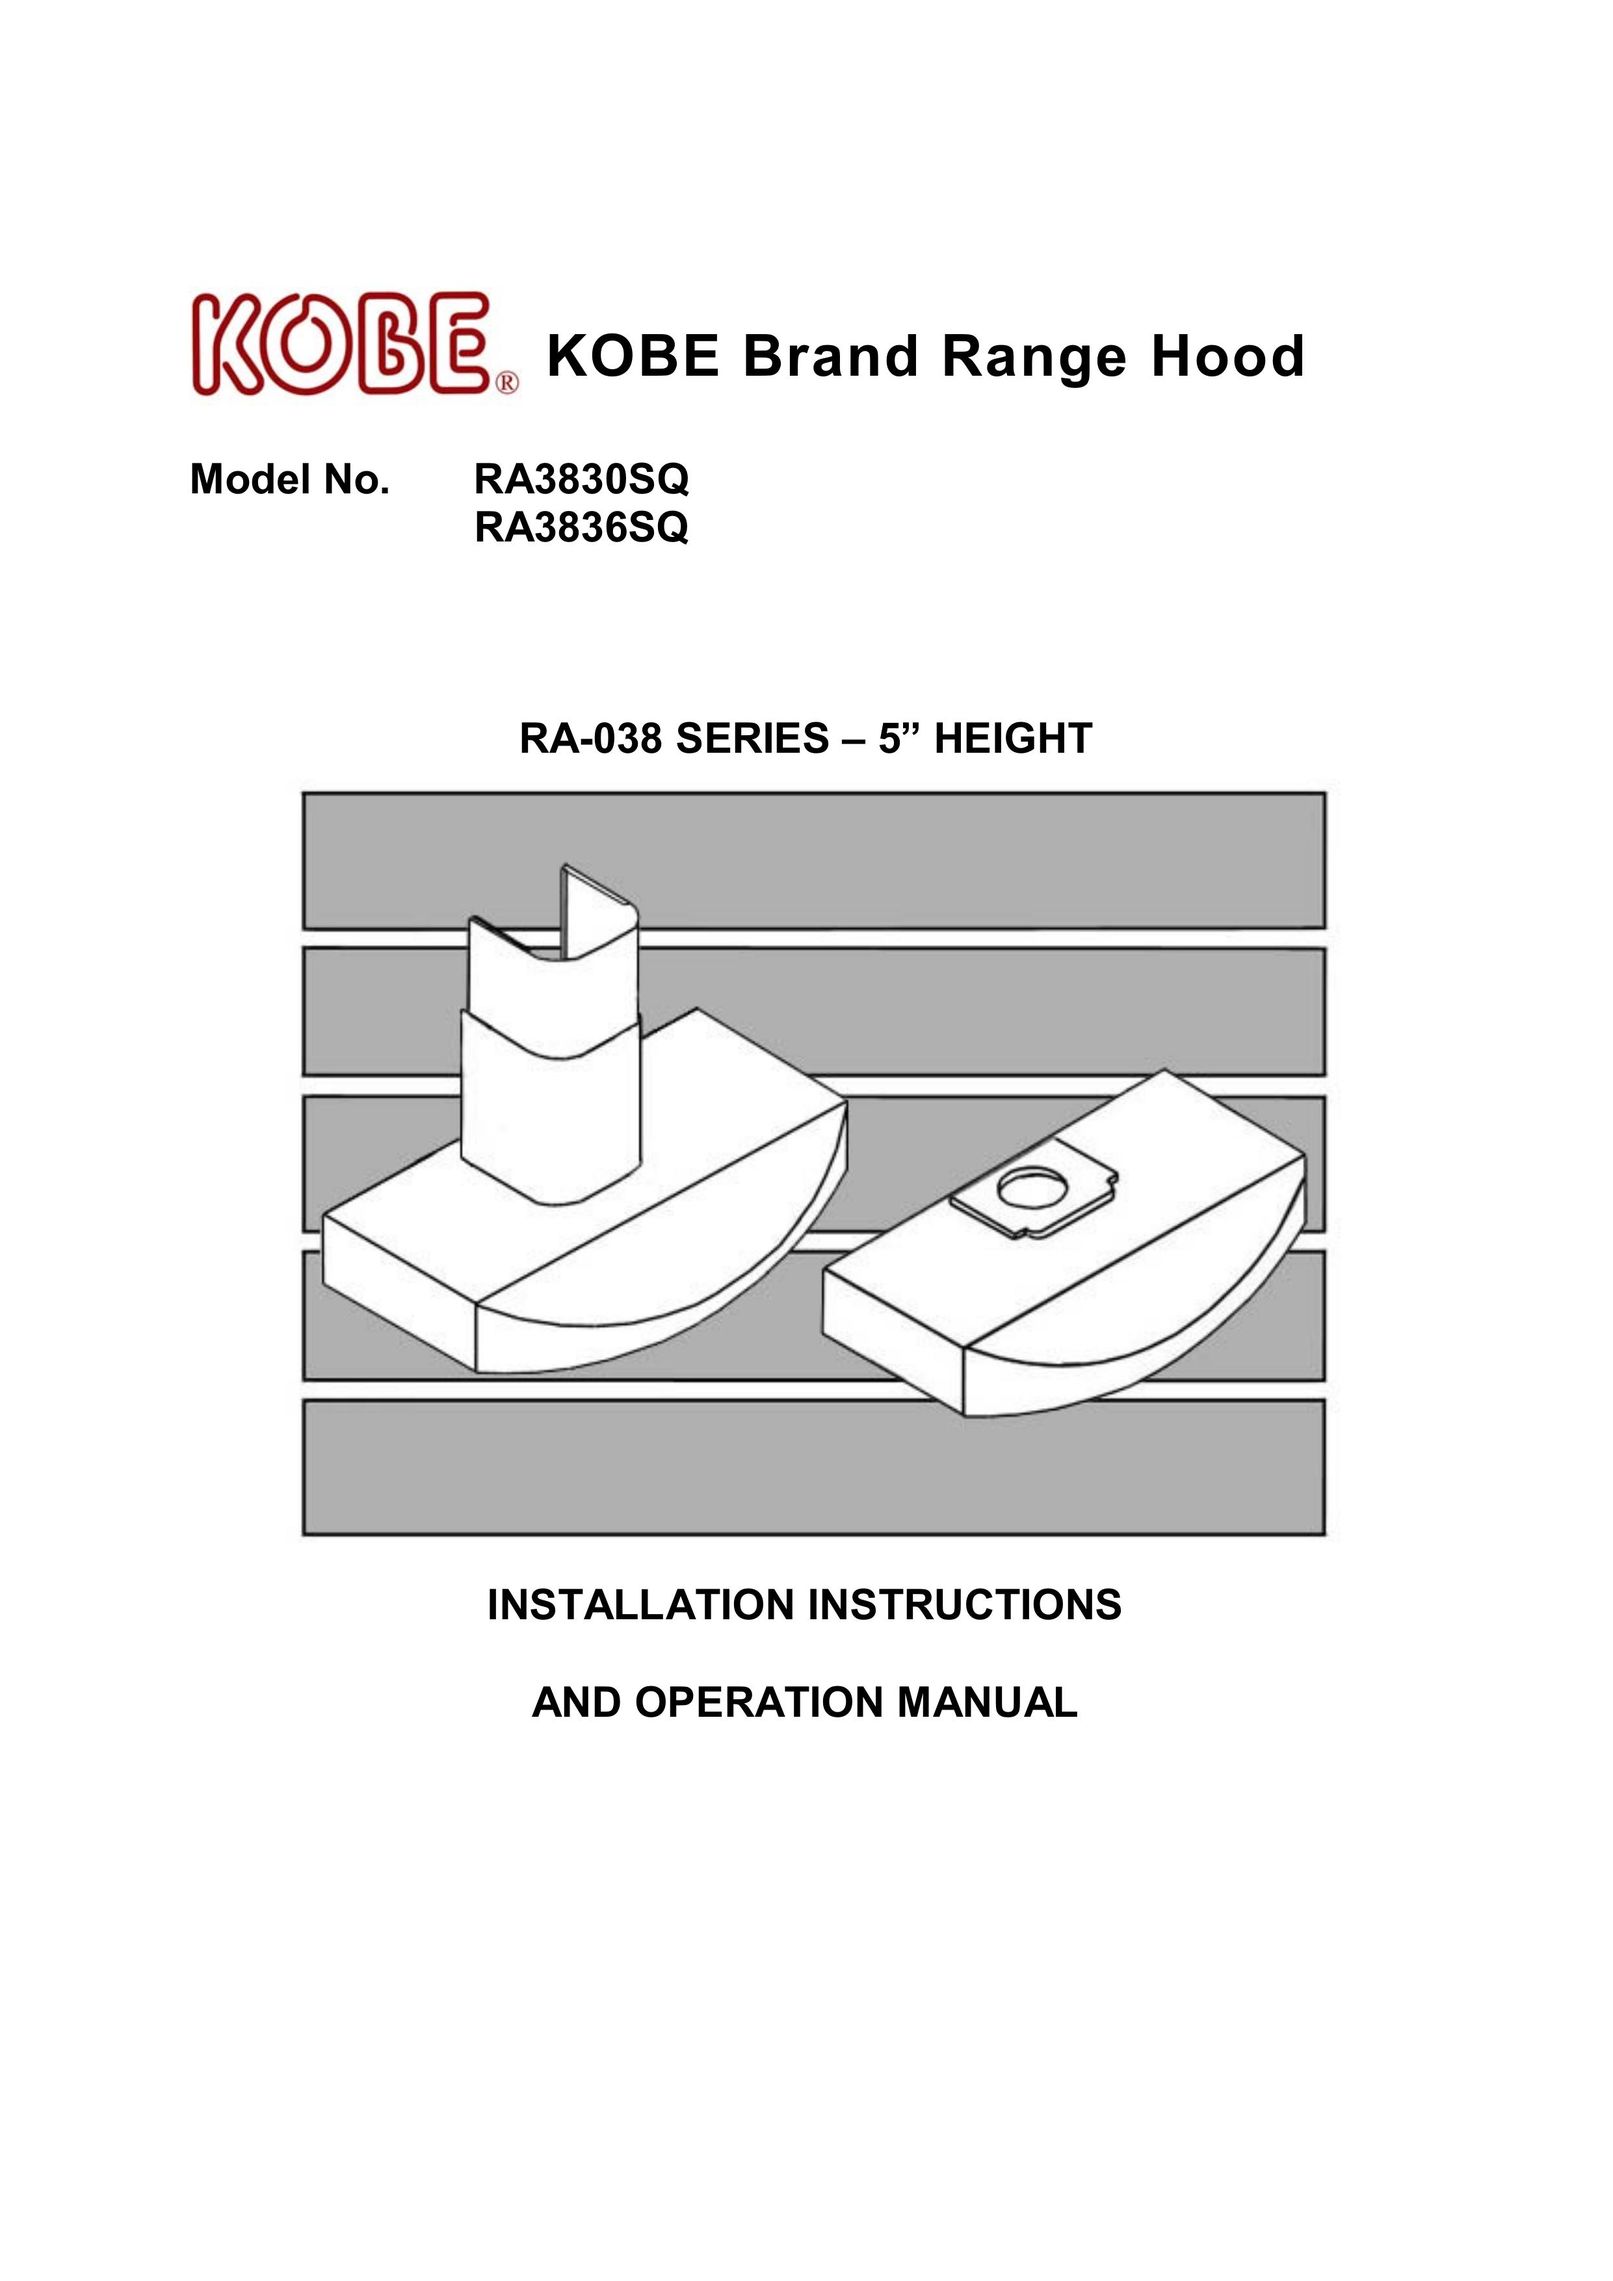 Kobe Range Hoods RA3836SQ Gas Heater User Manual